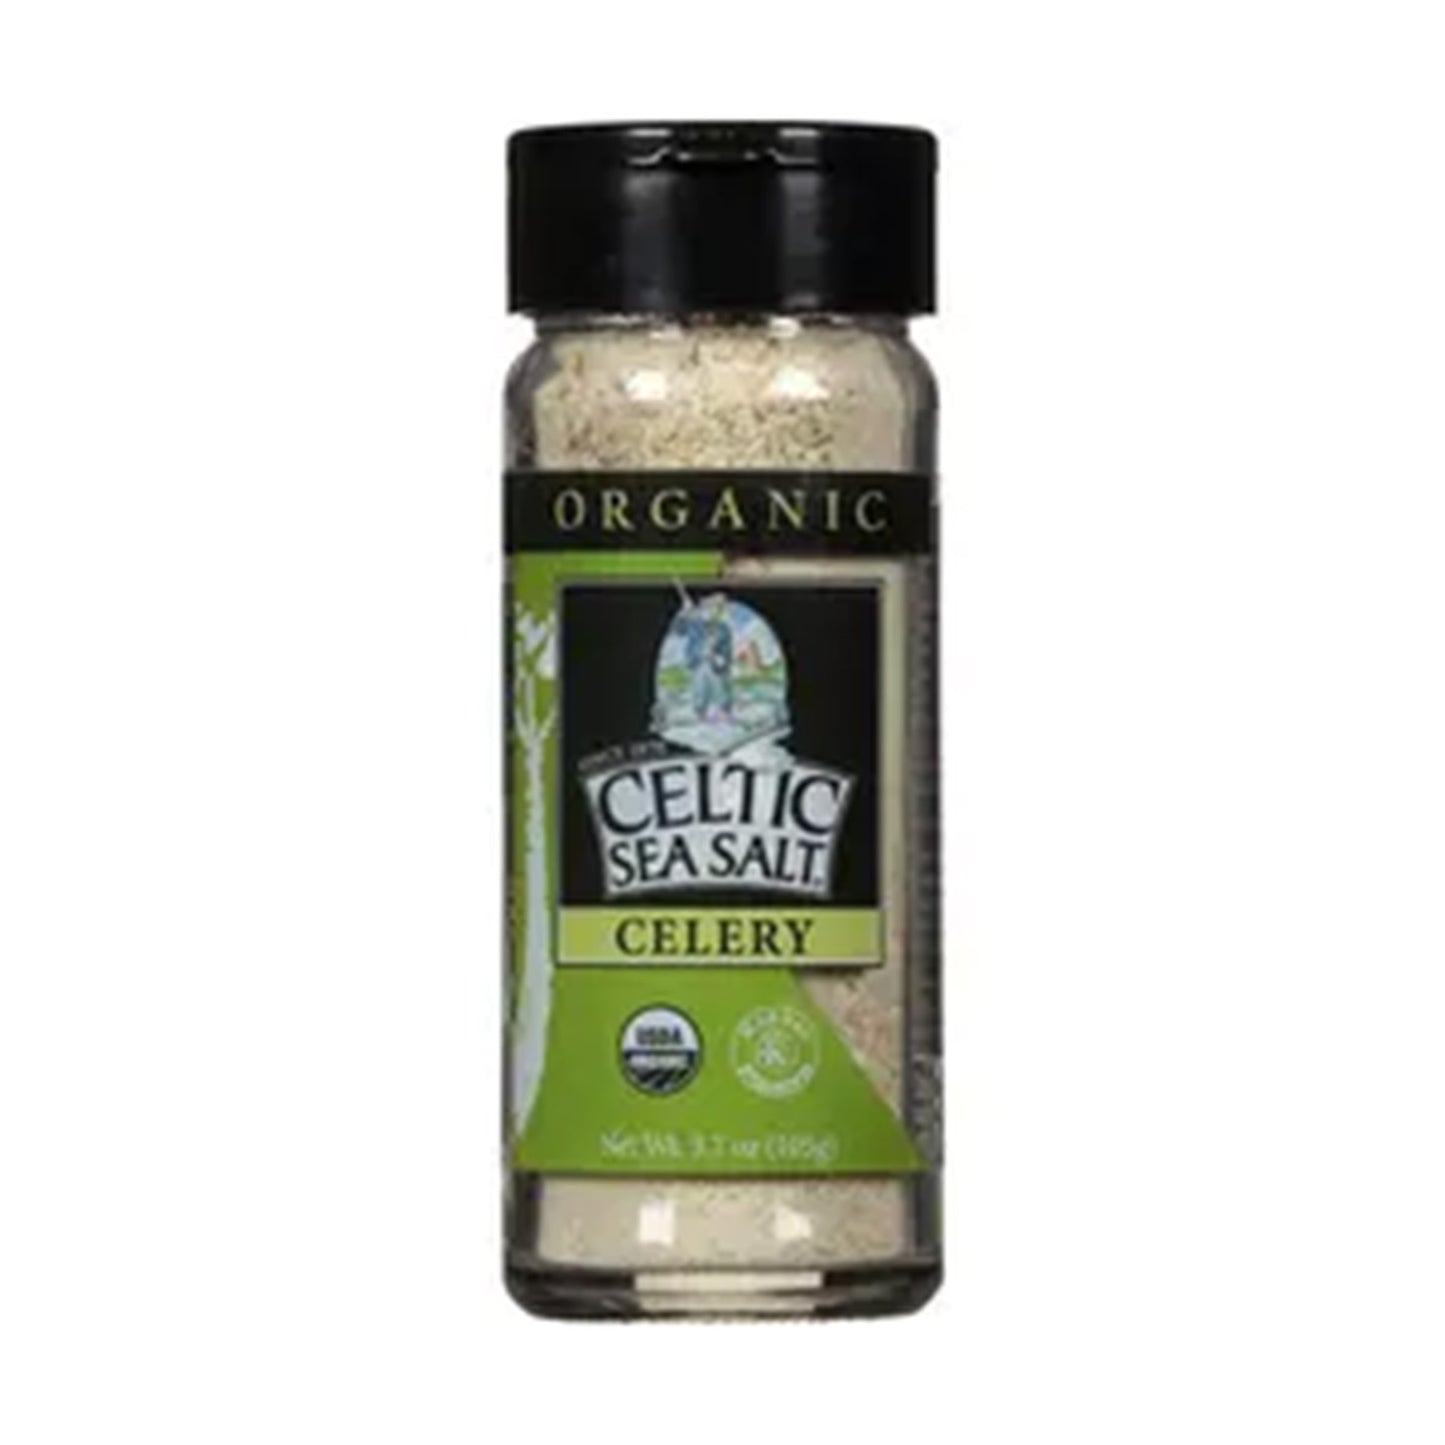 Celtic Sea Salt Seasoning - Organic Celery Seasoned: Elevate Your Flavors | ProHealth Shop [Panamá]